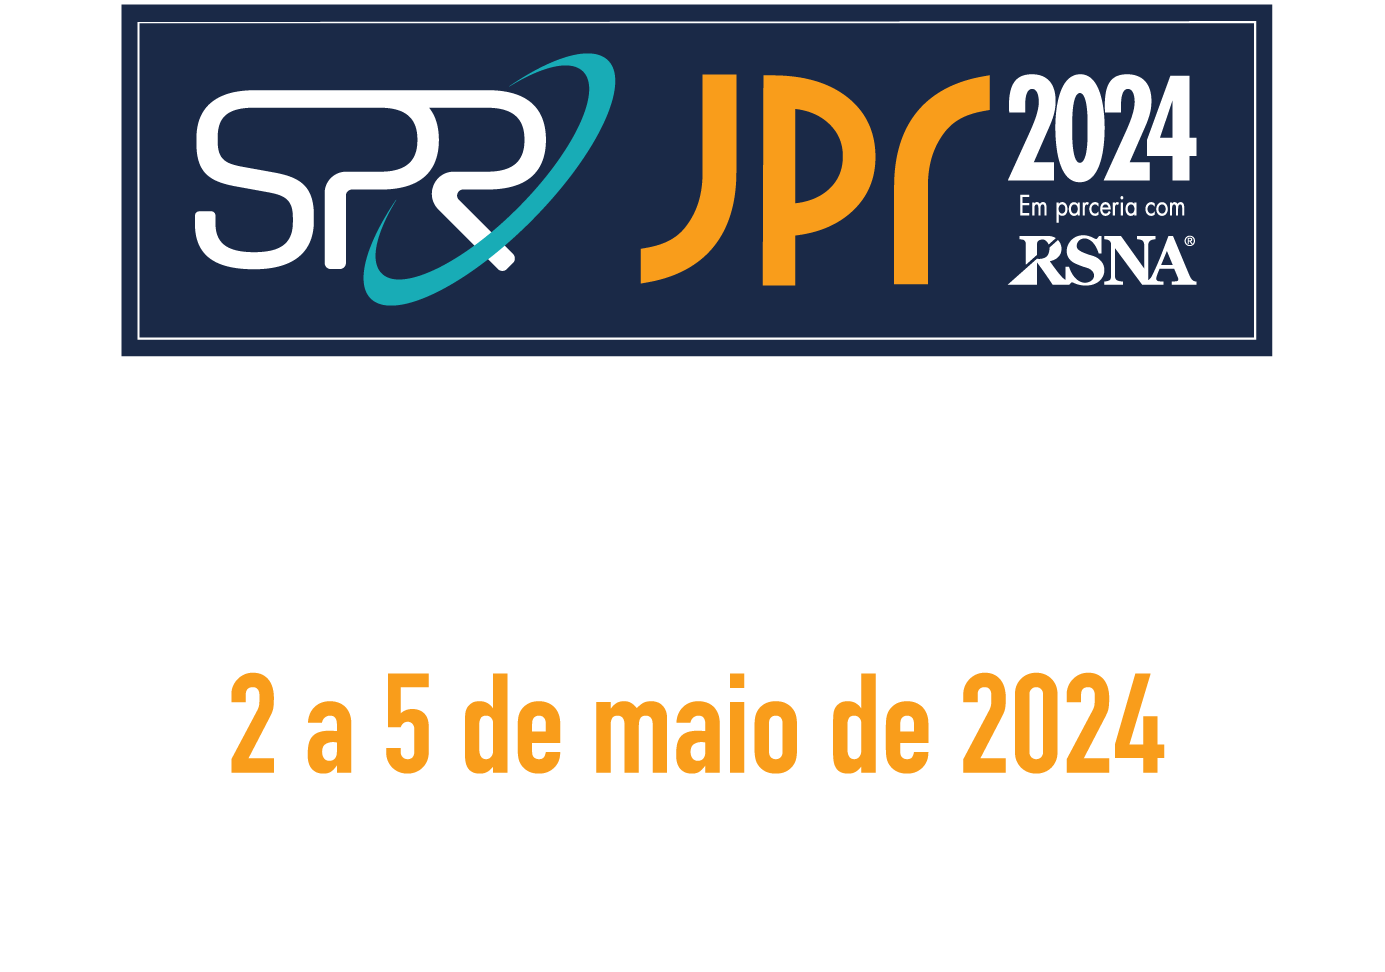 JPR 2024